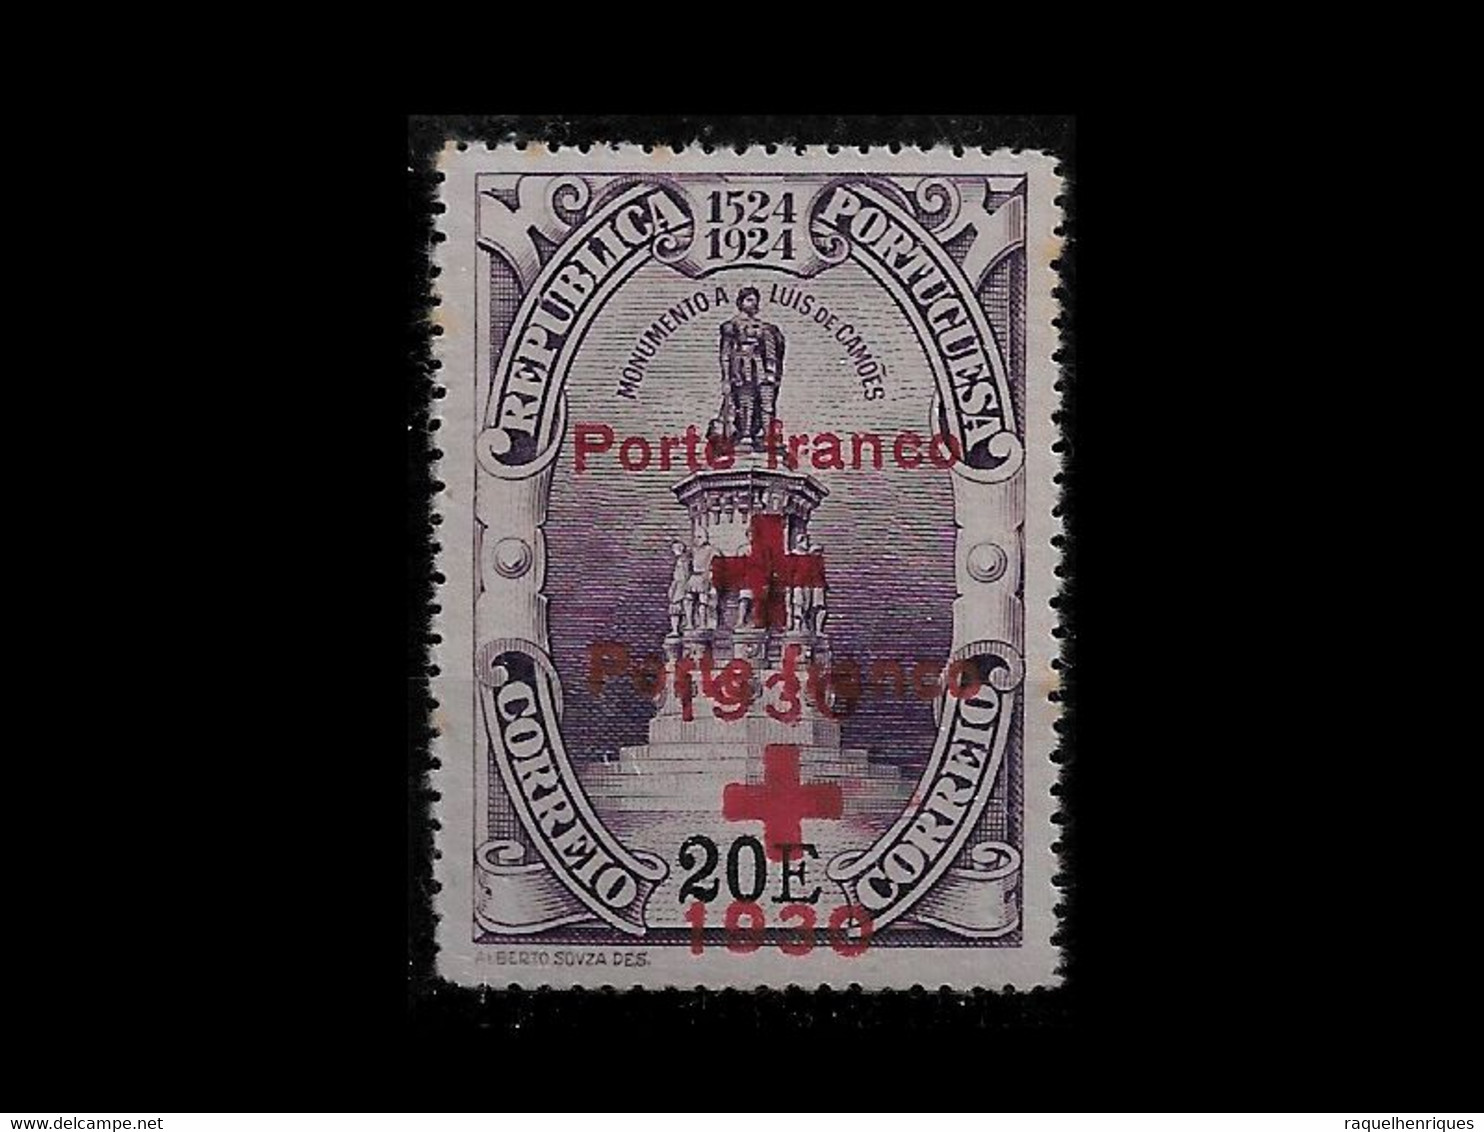 PORTUGAL PORTE FRANCO - 1930 ERROR DOUBLE SURCHARGED MNH (PLB#01-109) - Ongebruikt